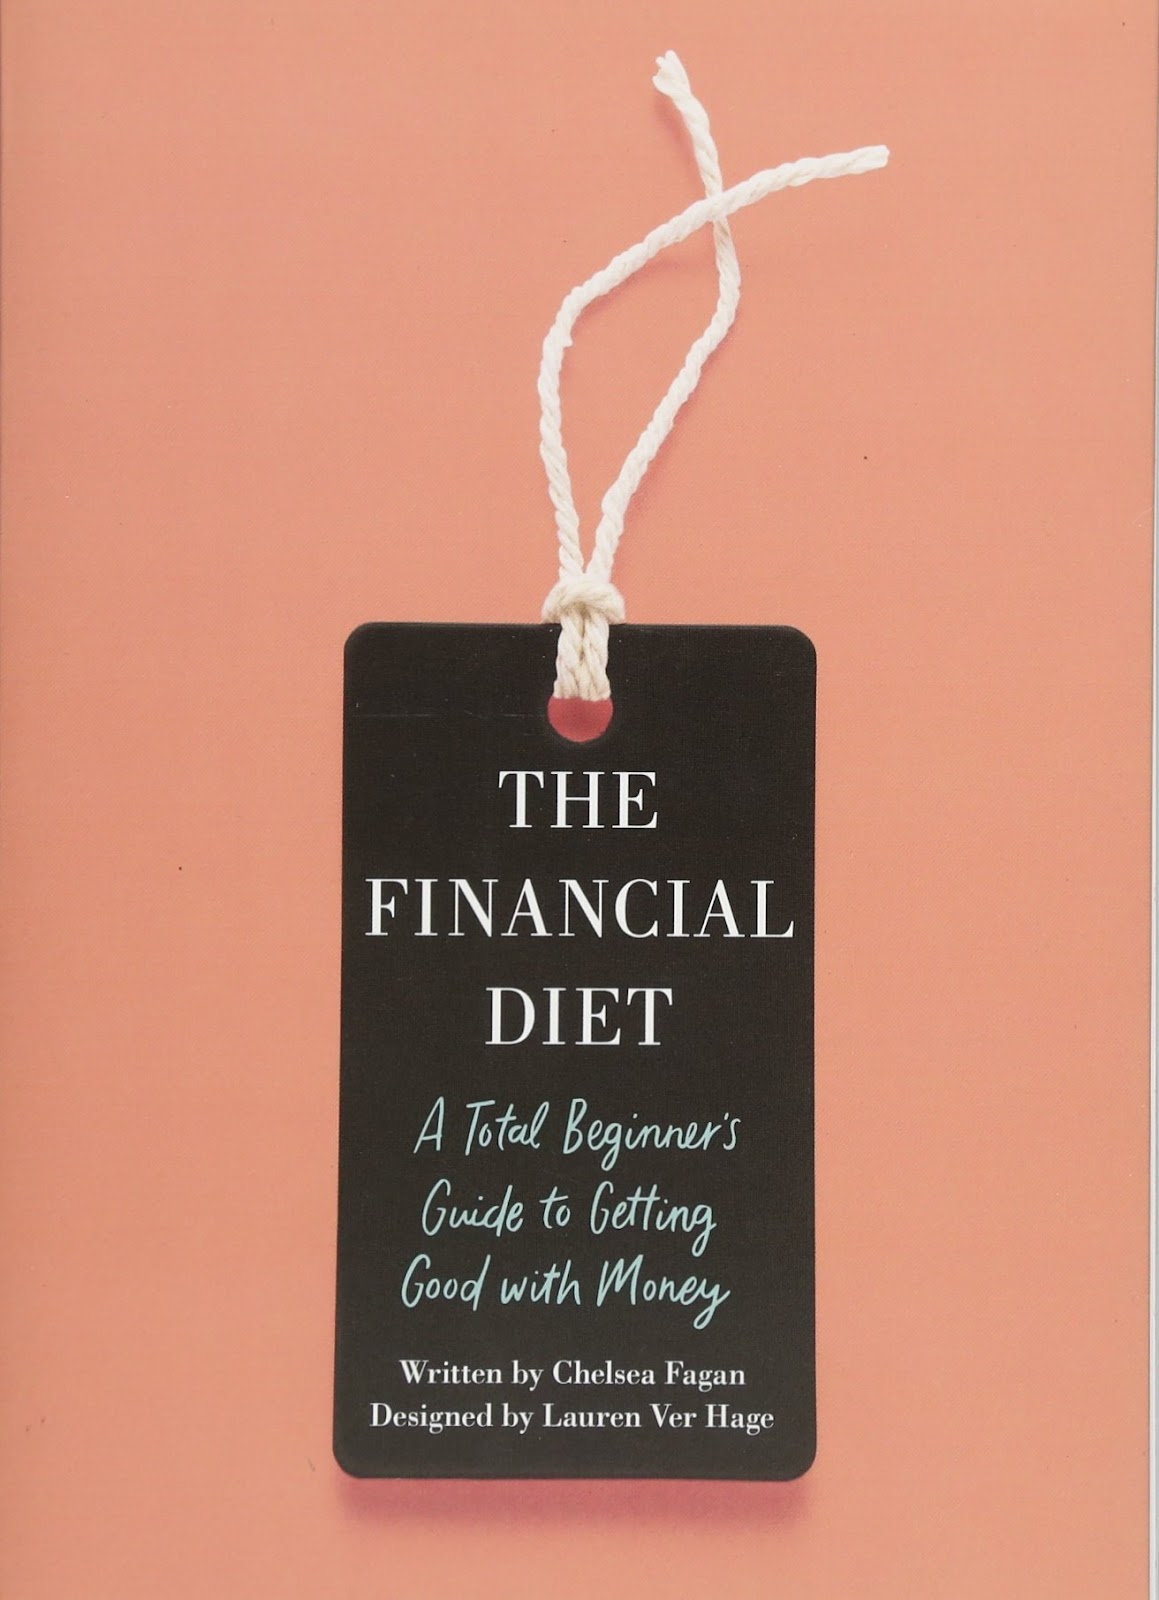 The Financial Diet book